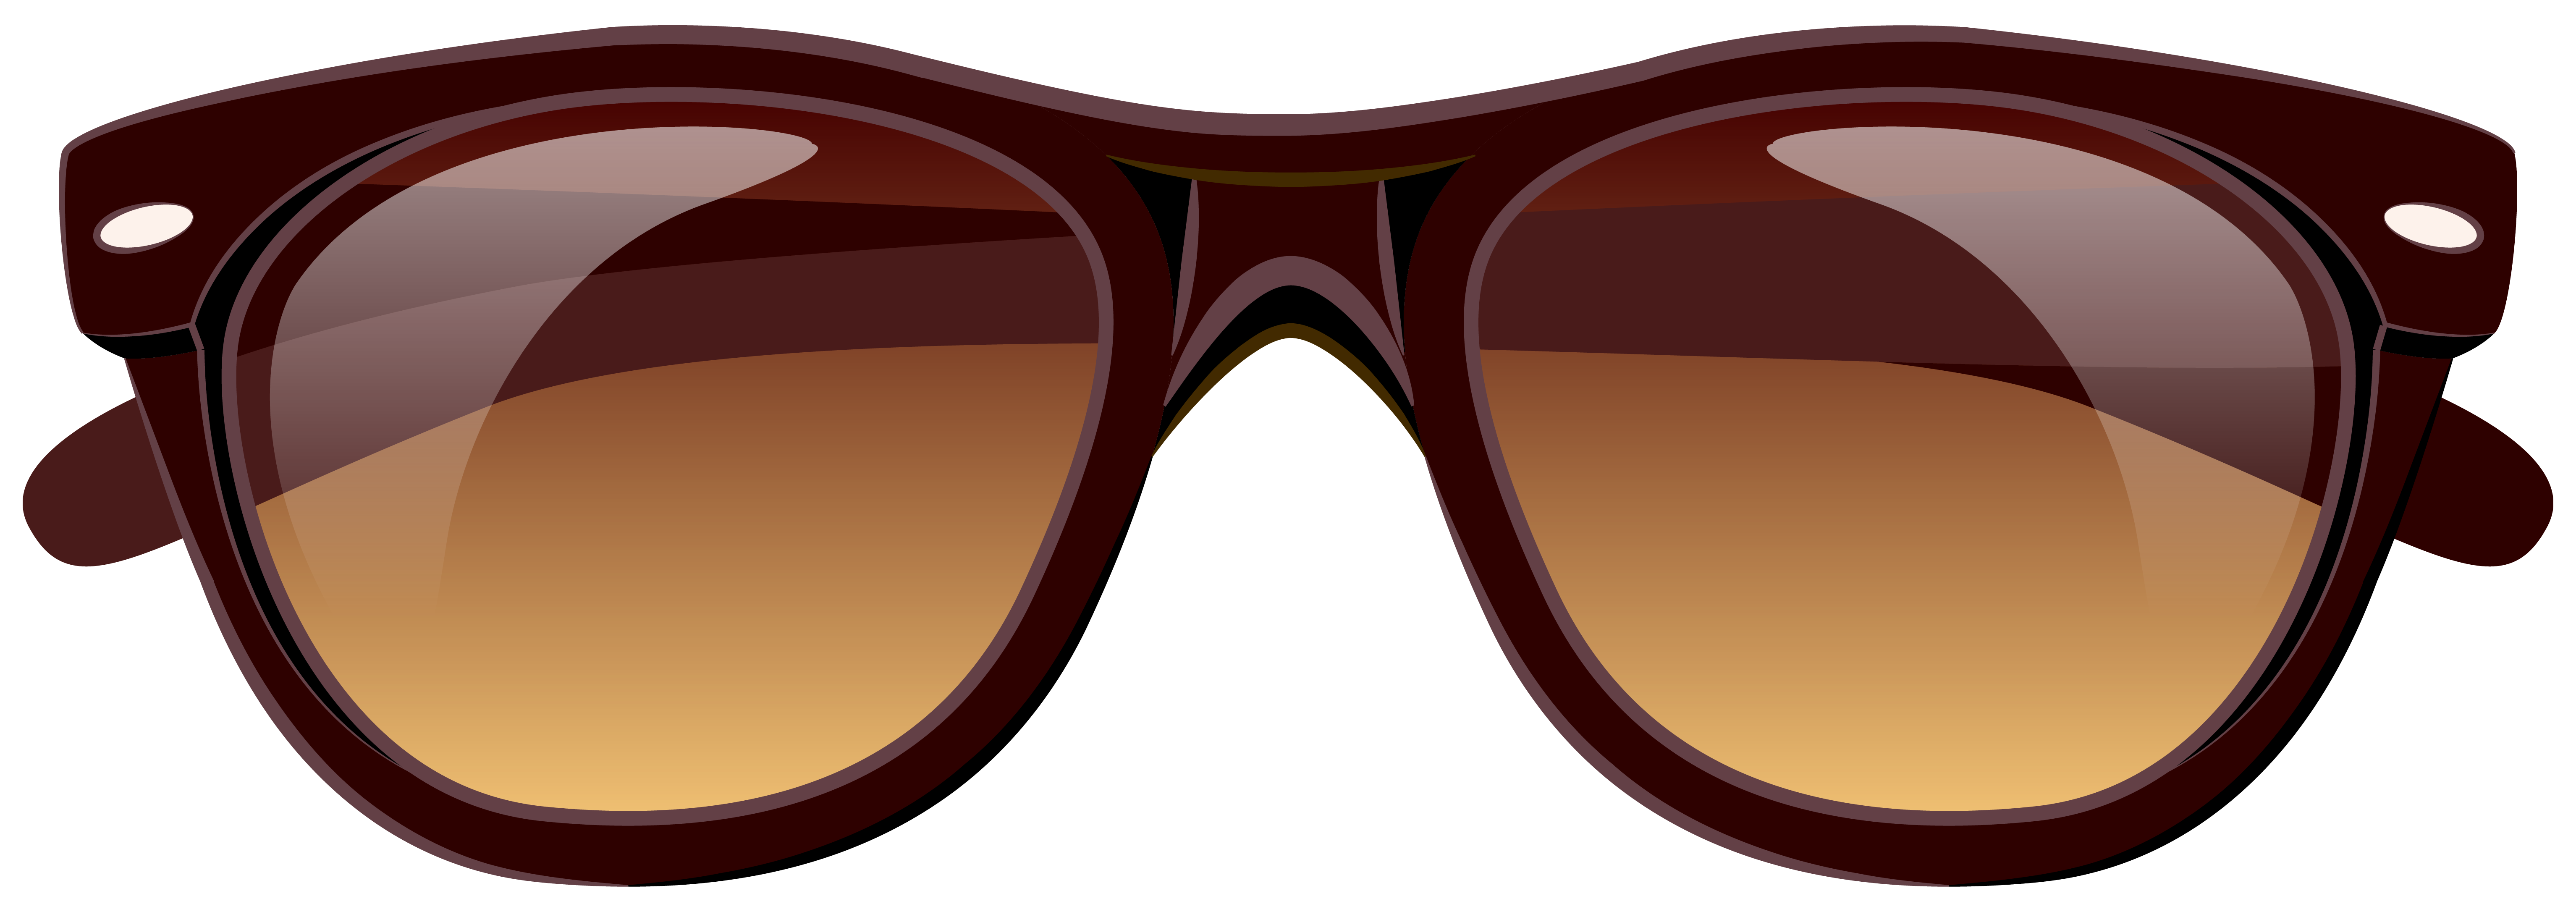 sunglasses may